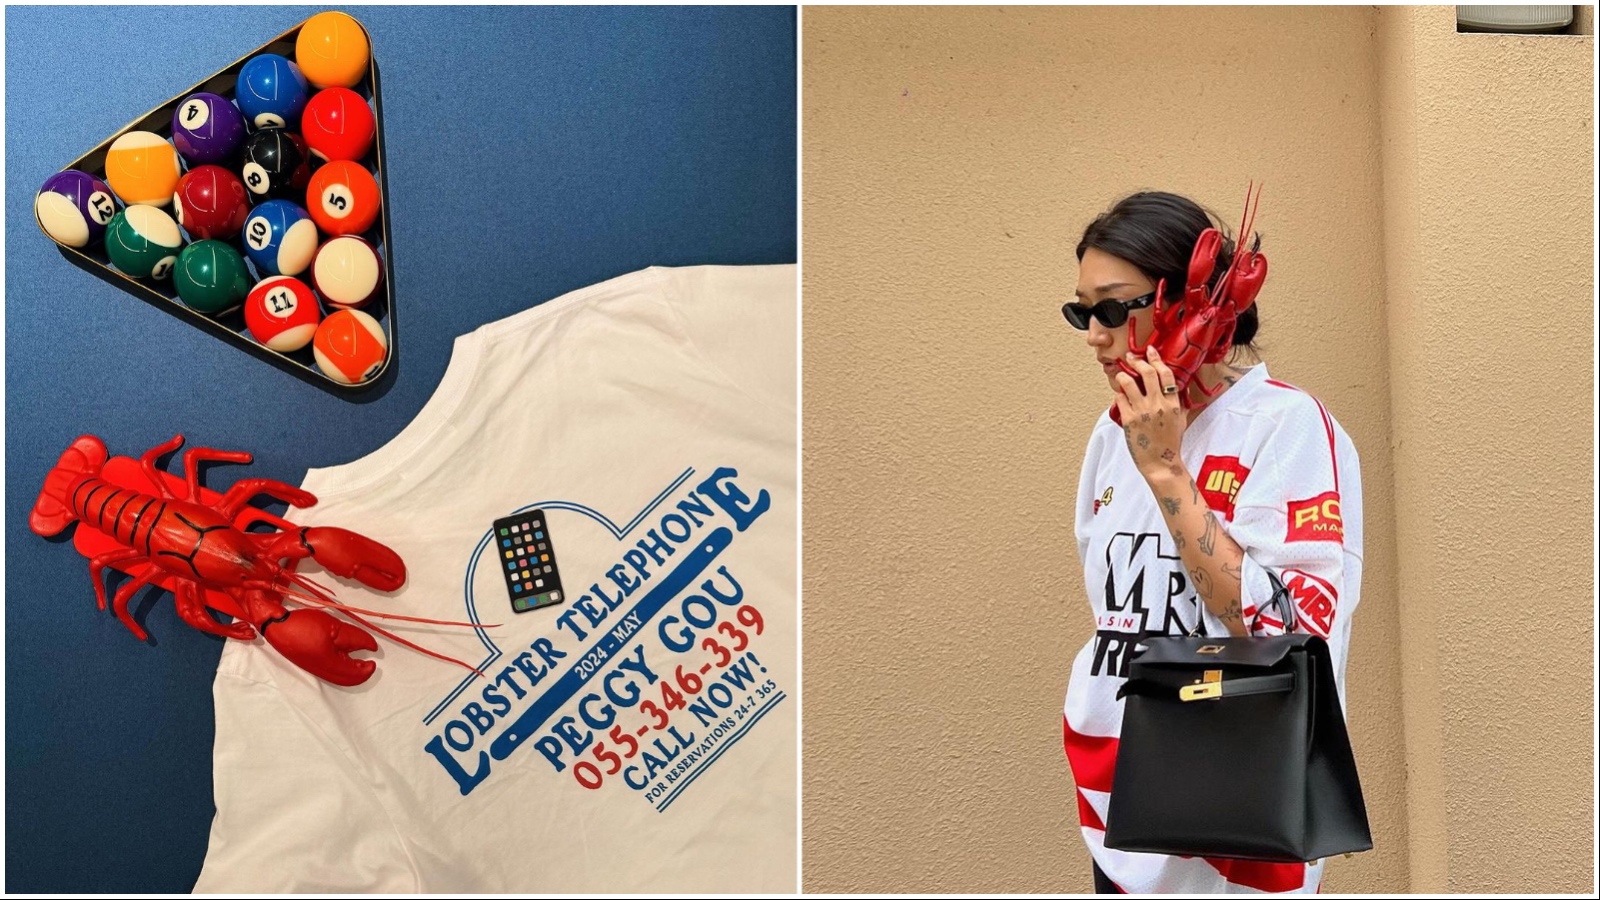 Peggy Gou ima novu himnu leta koja nosi naziv “Lobster Telephone”